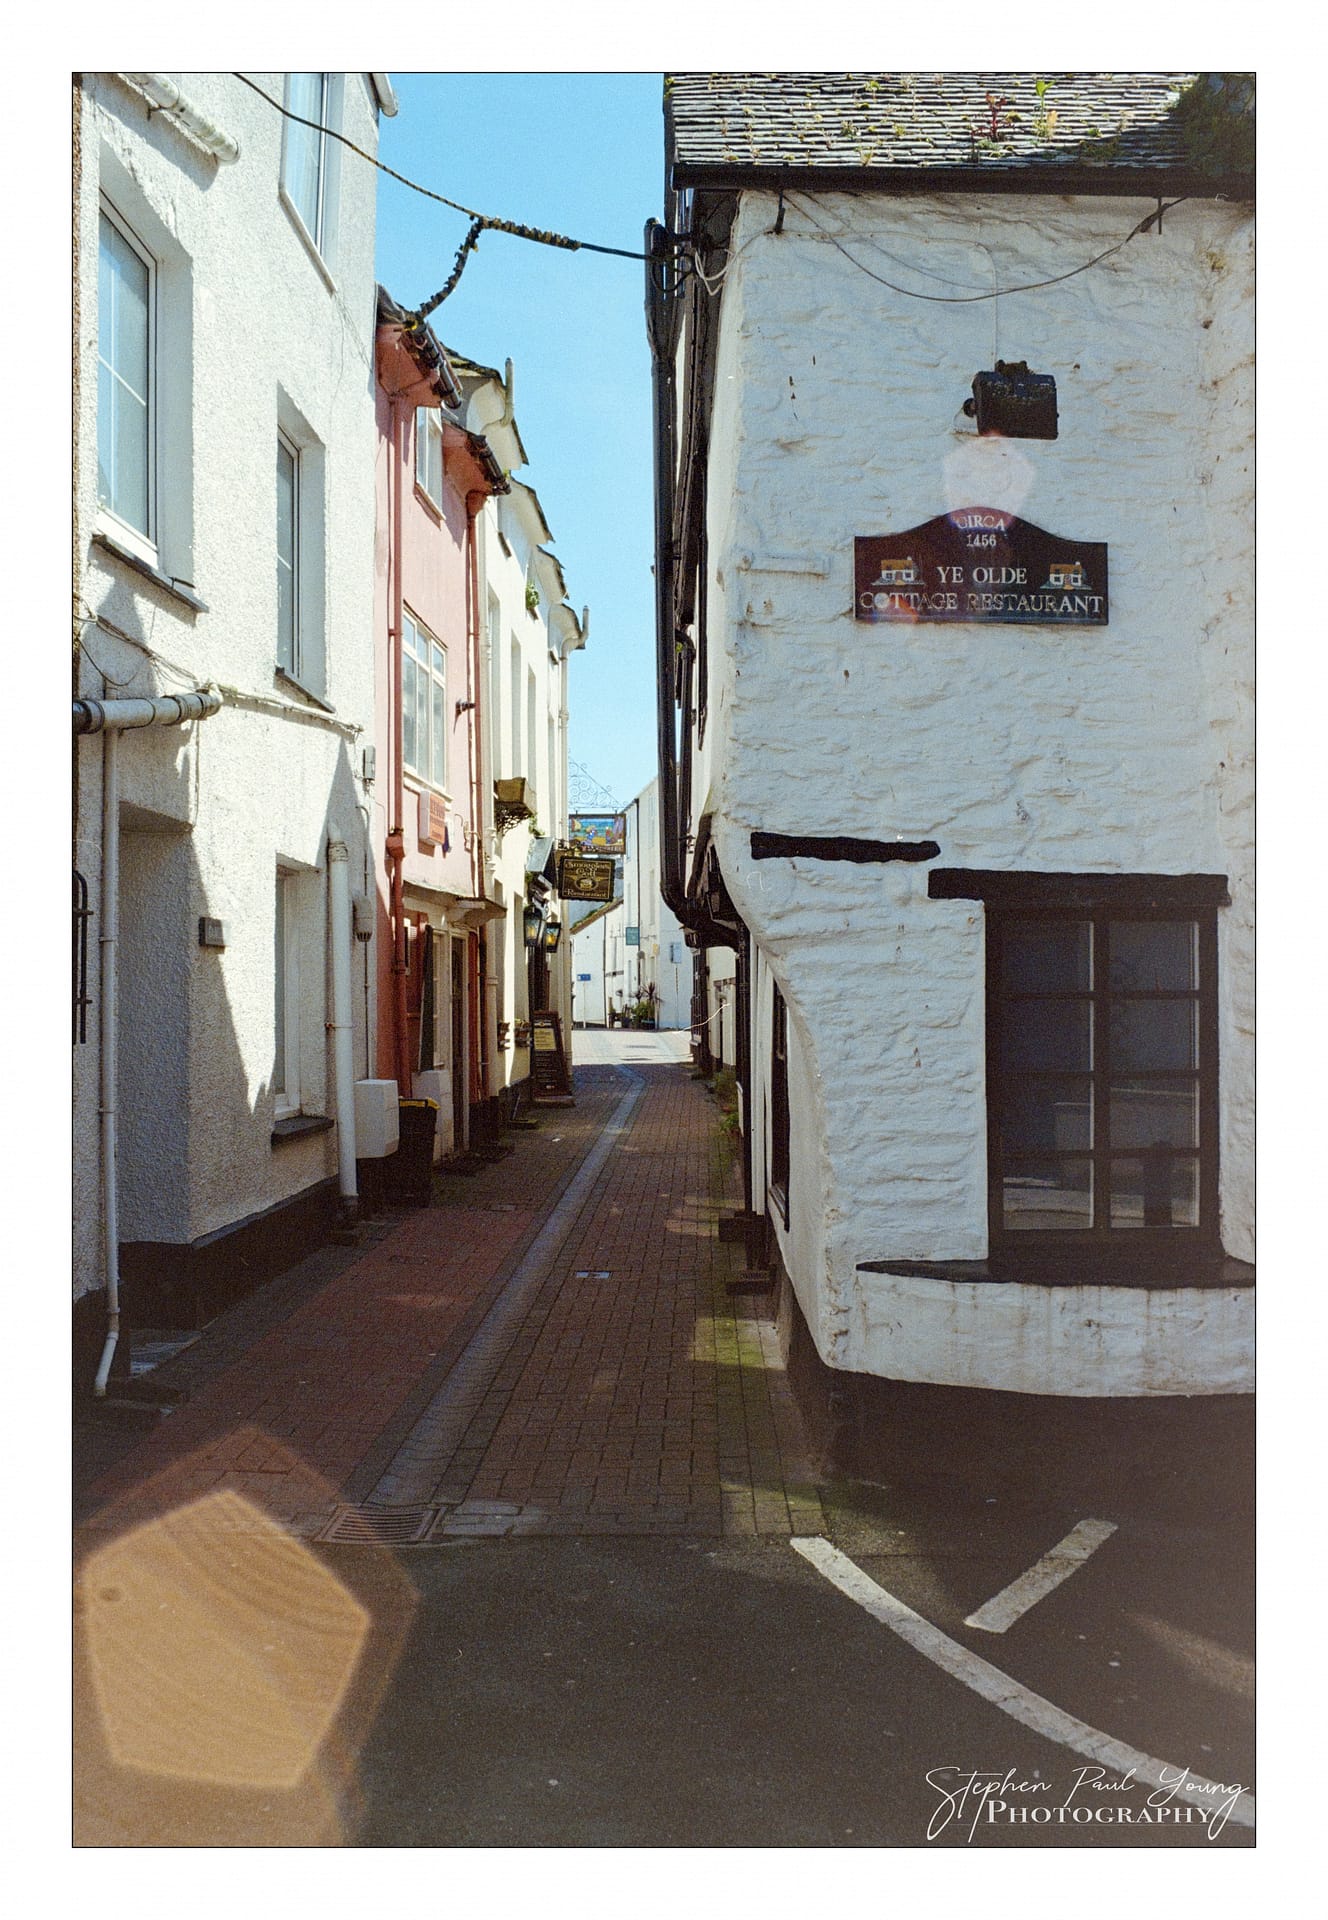 Looe, Cornwall on my Canon EOS 300v and a roll of Kodak Max 400